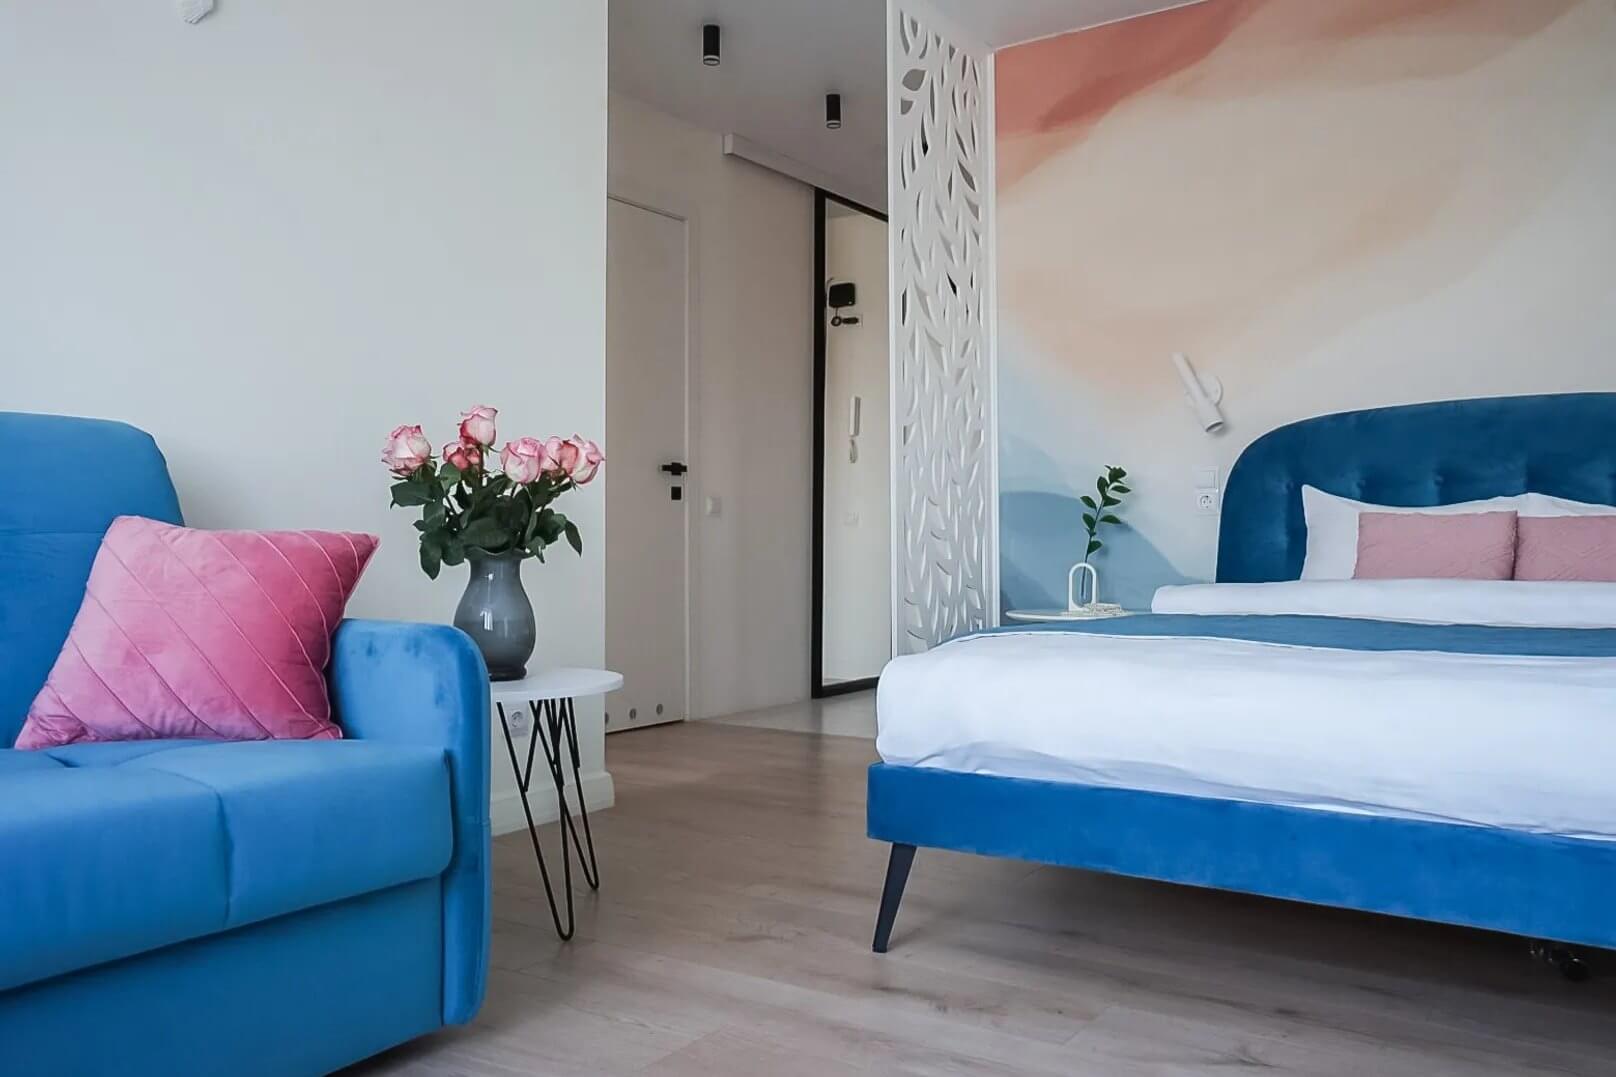 У кровати и дивана - красивая синяя обивка. Подушки - розовые.